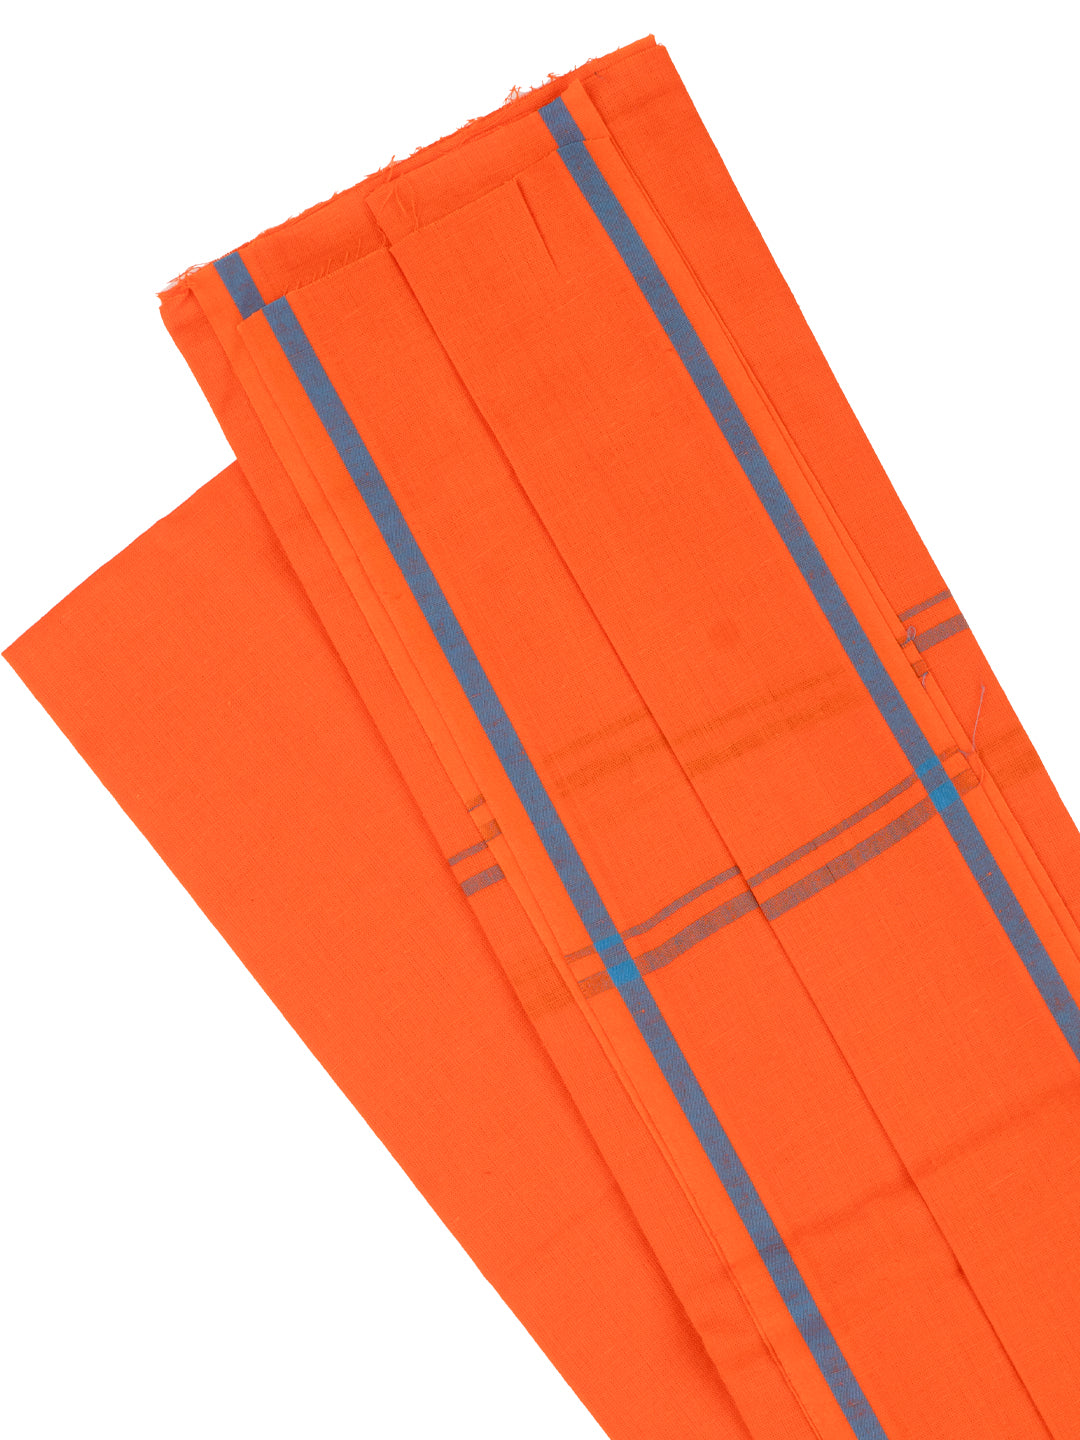 Roland Orange Towel -2Pcs Combo Pack (Assorted Border)